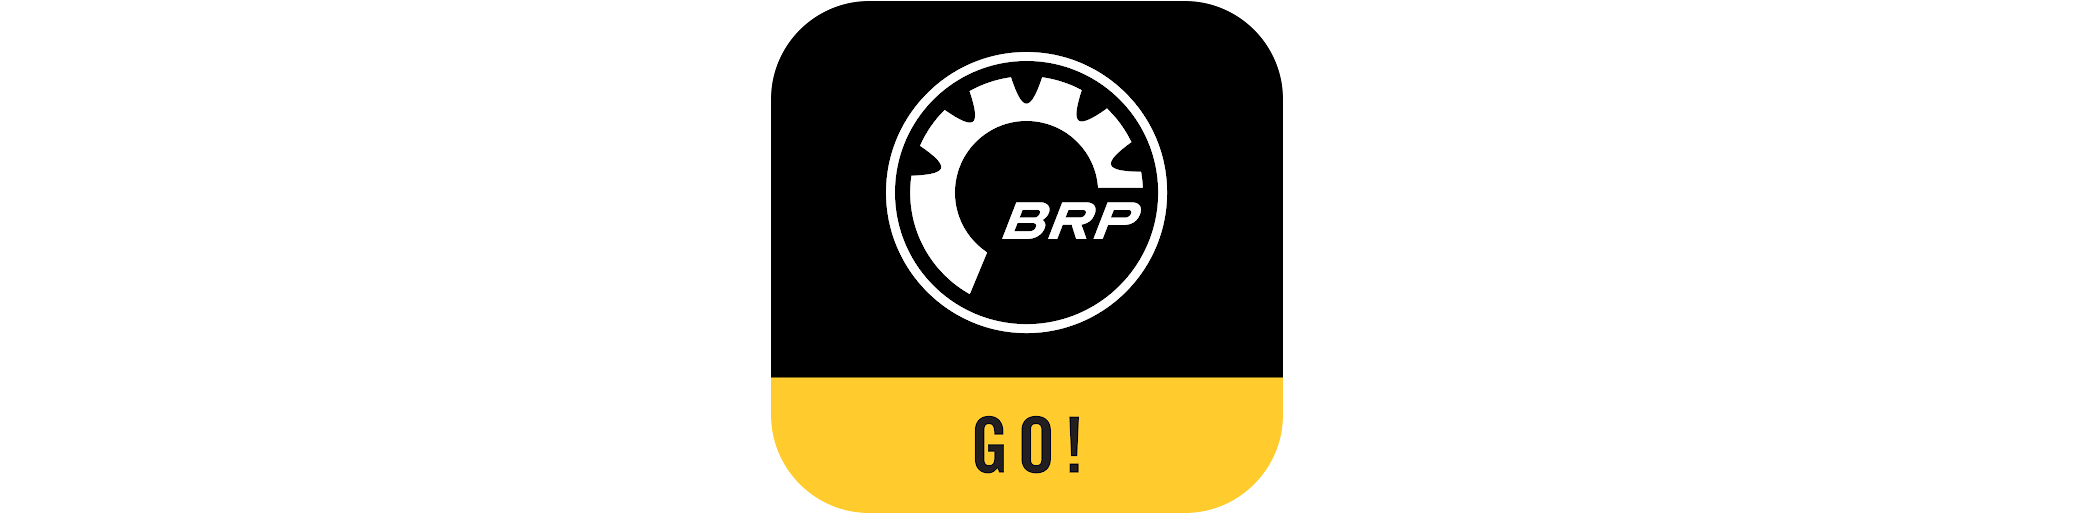 BRP GO!  aplikacija logo